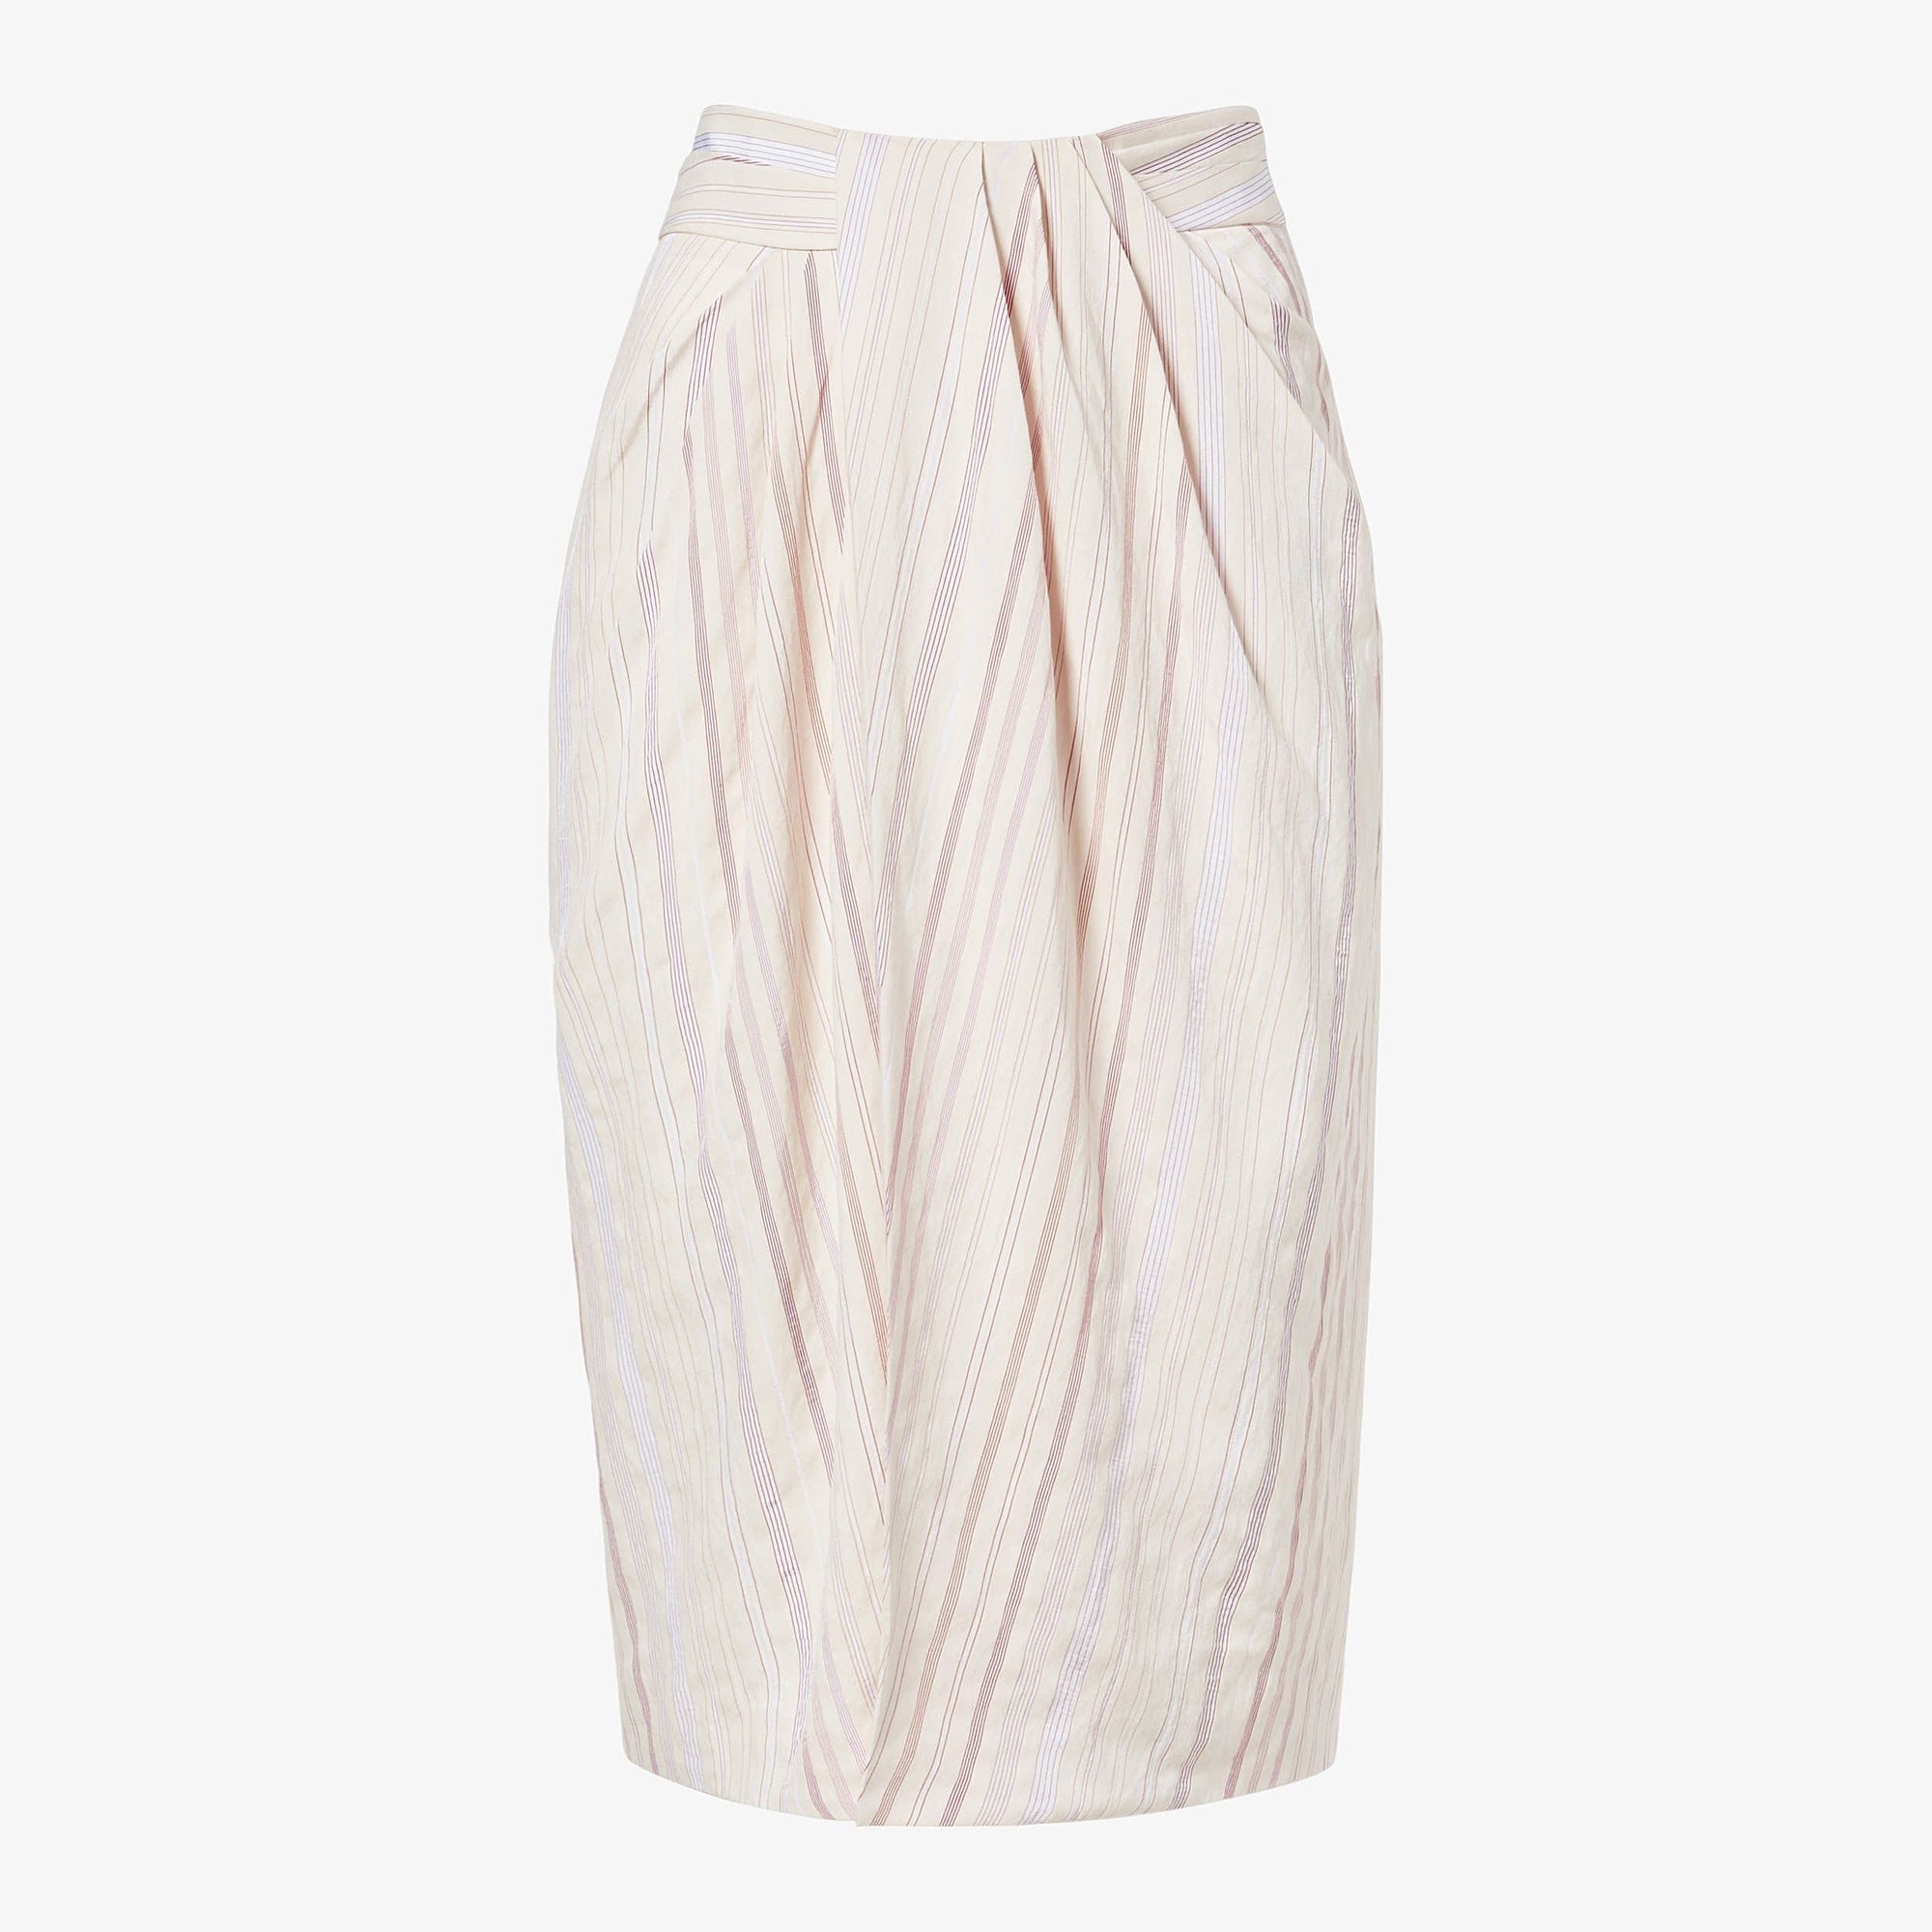 Packshot image of the lenox skirt in twill stripe in ivory / red